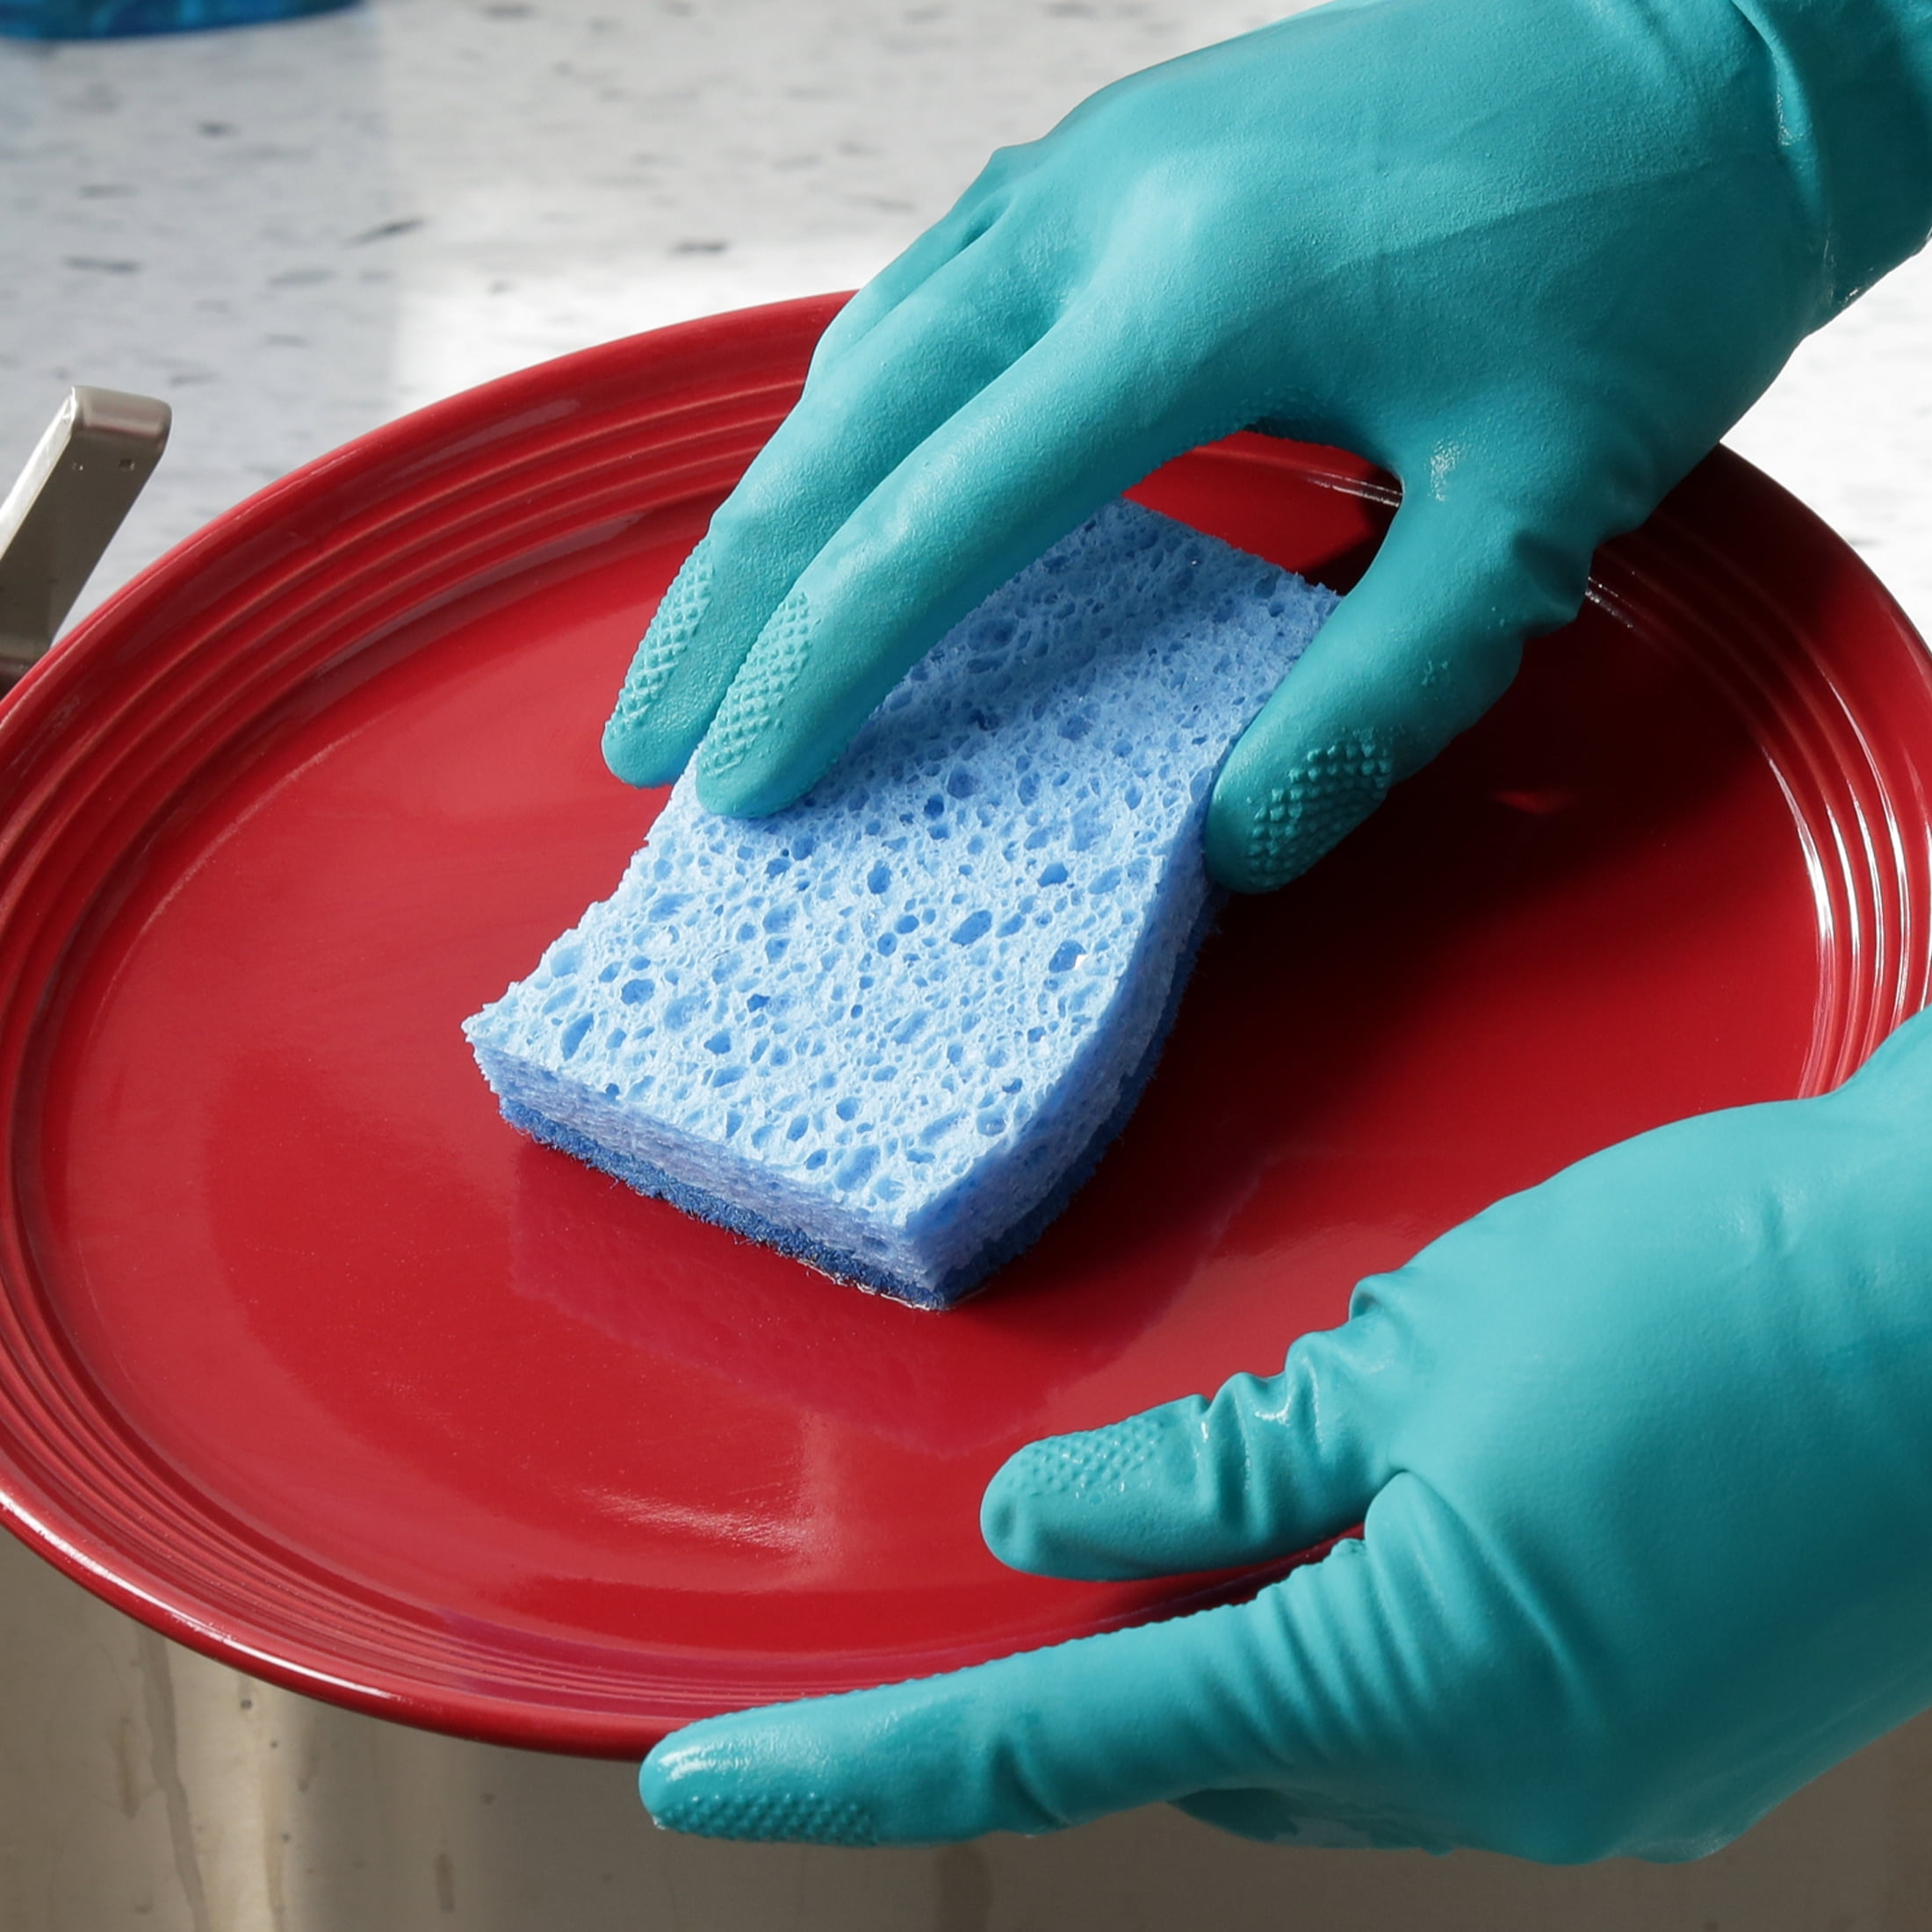 UPSTAR Microfiber Scrubber Sponge, Non-Scratch Kitchen Scrubbies,  Dishwashing and Bathroom Sponges, Size L Pack of 4